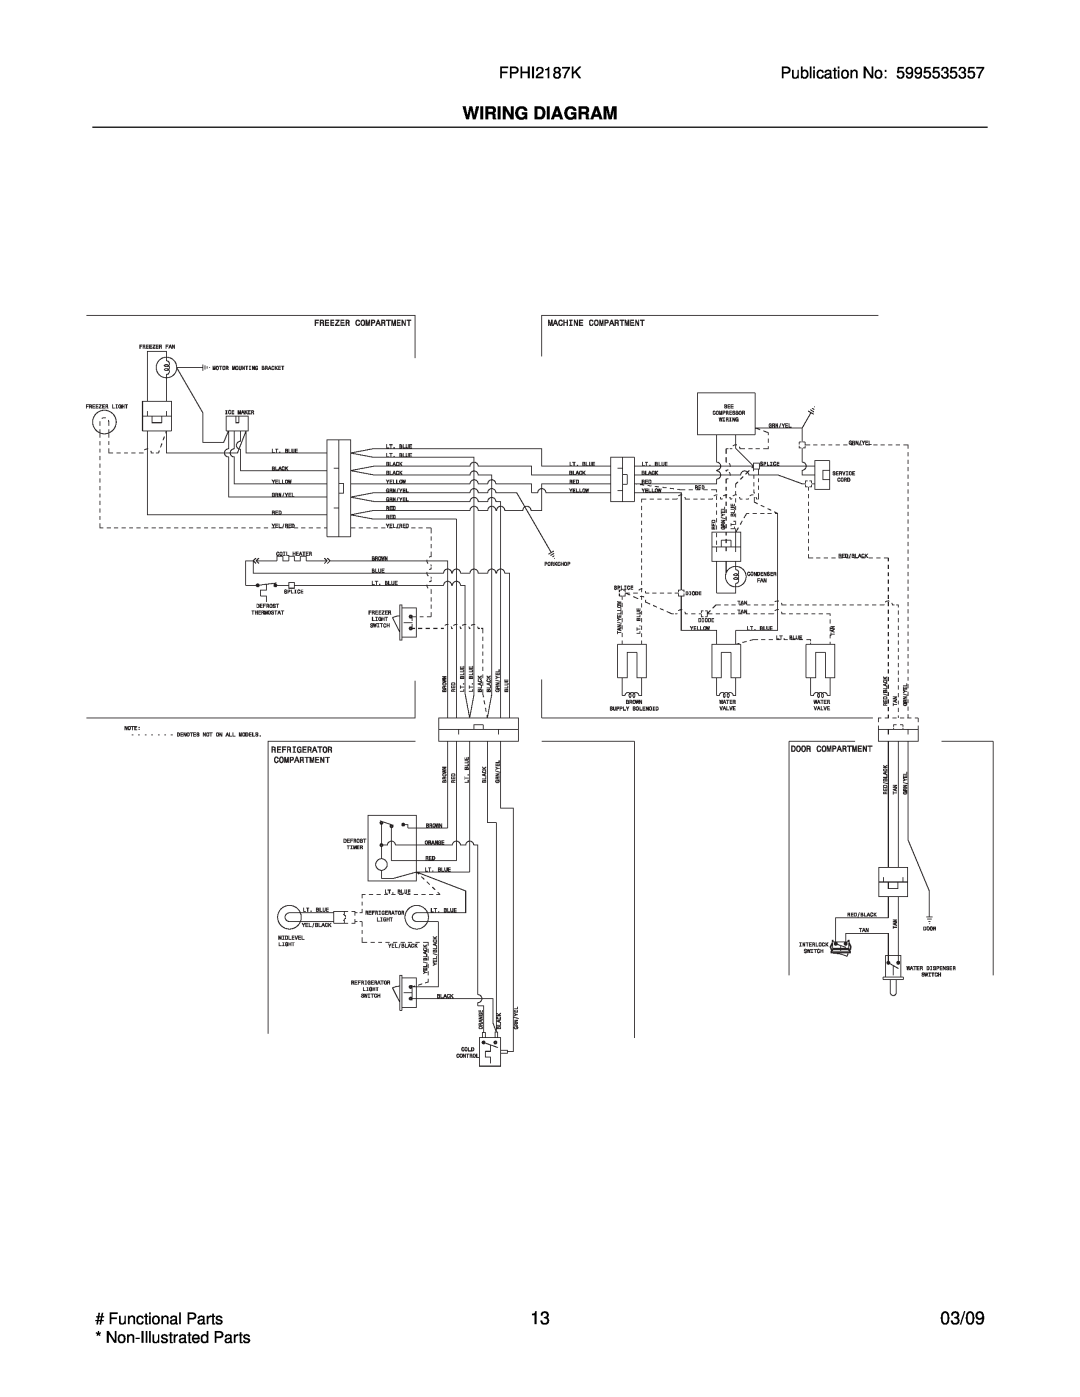 Frigidaire FPHI2187K installation instructions Wiring Diagram, 03/09 